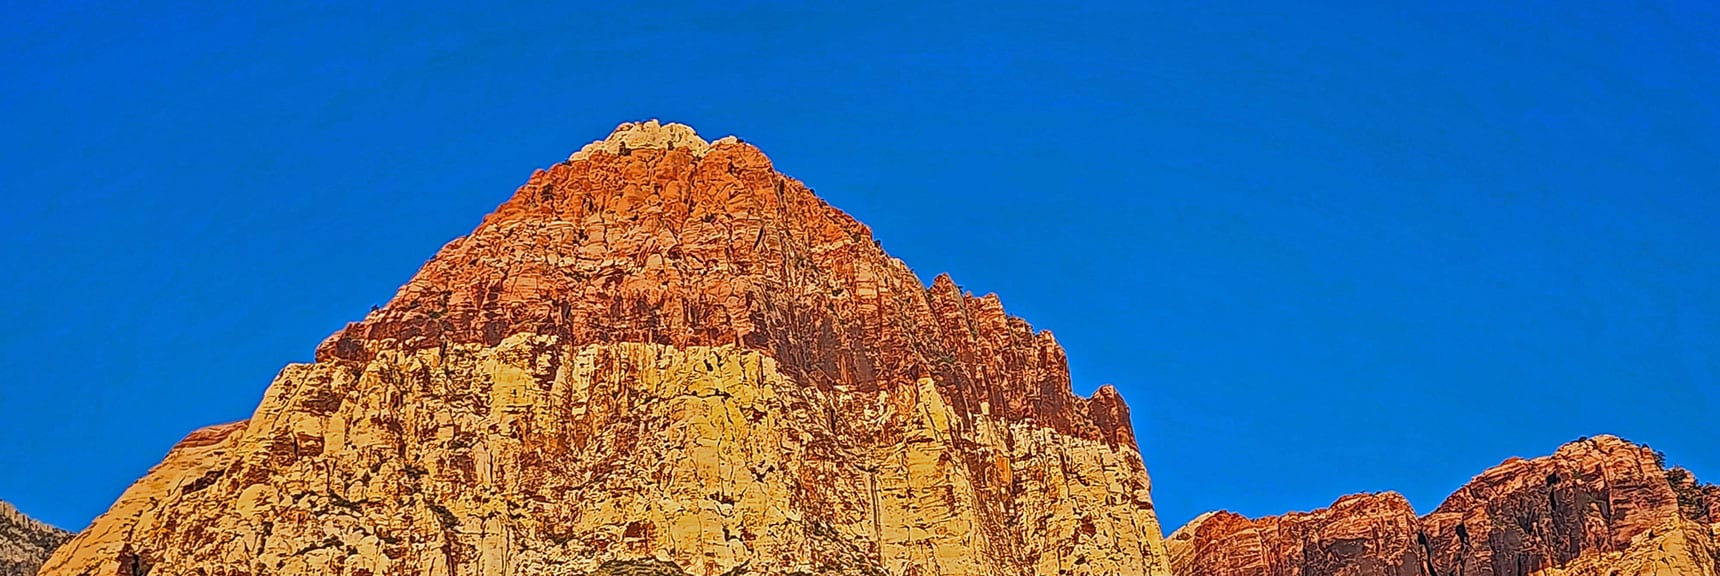 Rainbow Mountain | Knoll Trail | Red Rock Canyon National Conservation Area, Nevada | David Smith | LasVegasAreaTrails.com